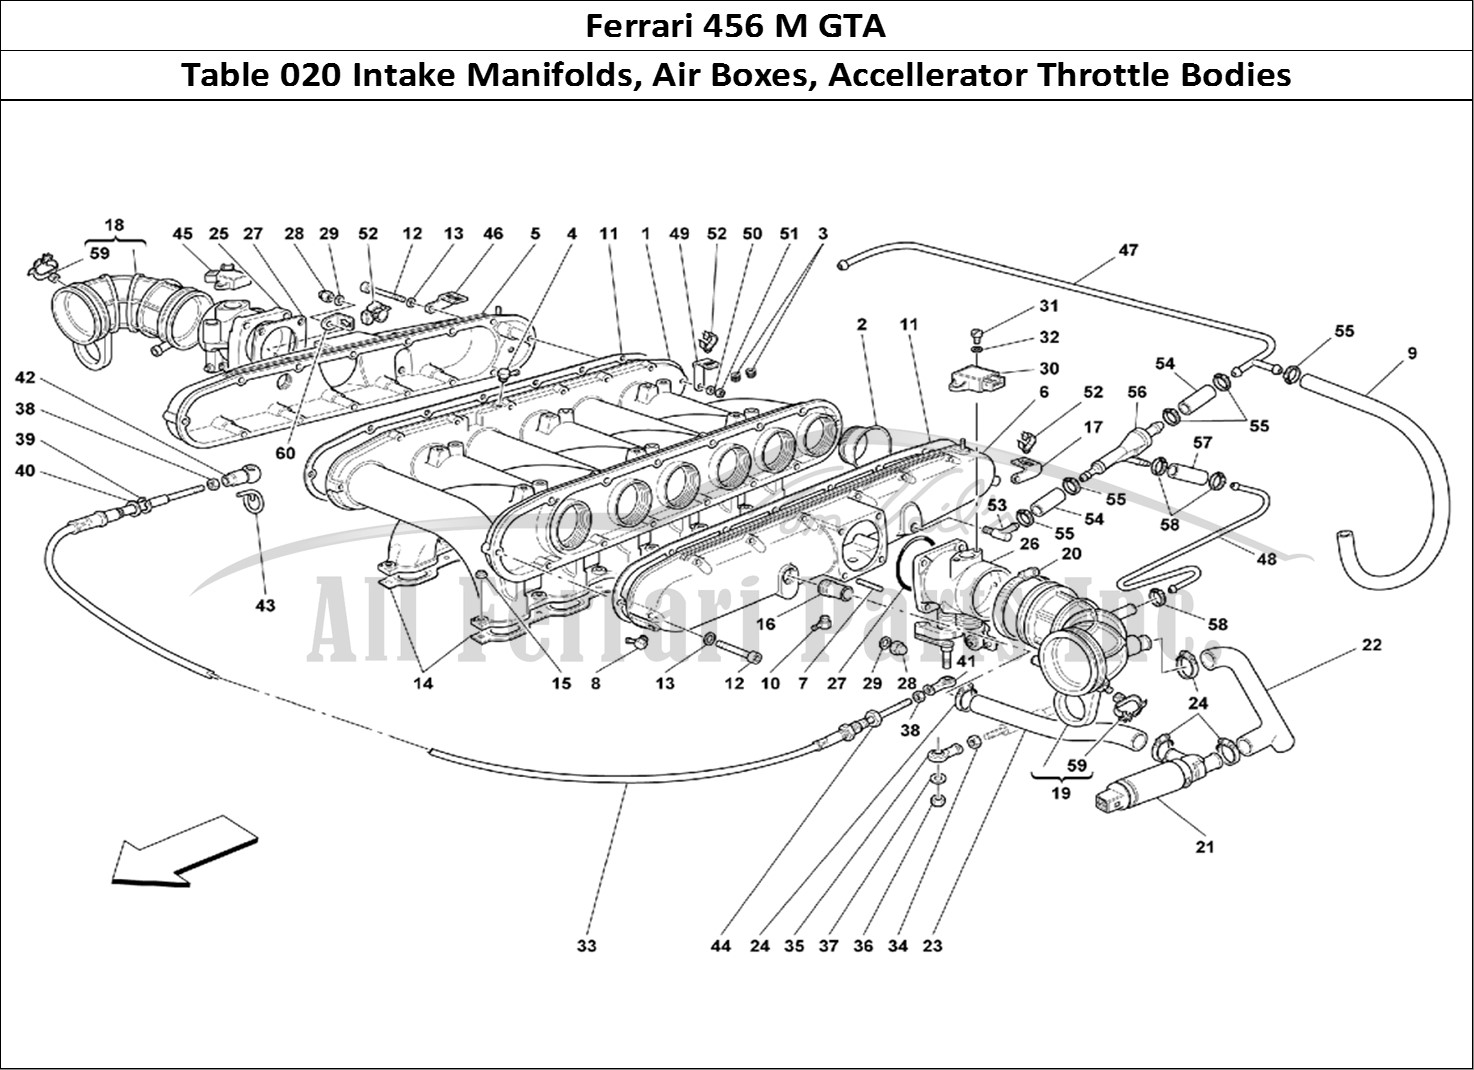 Ferrari Parts Ferrari 456 M GT Page 020 Air Intake Manifolds